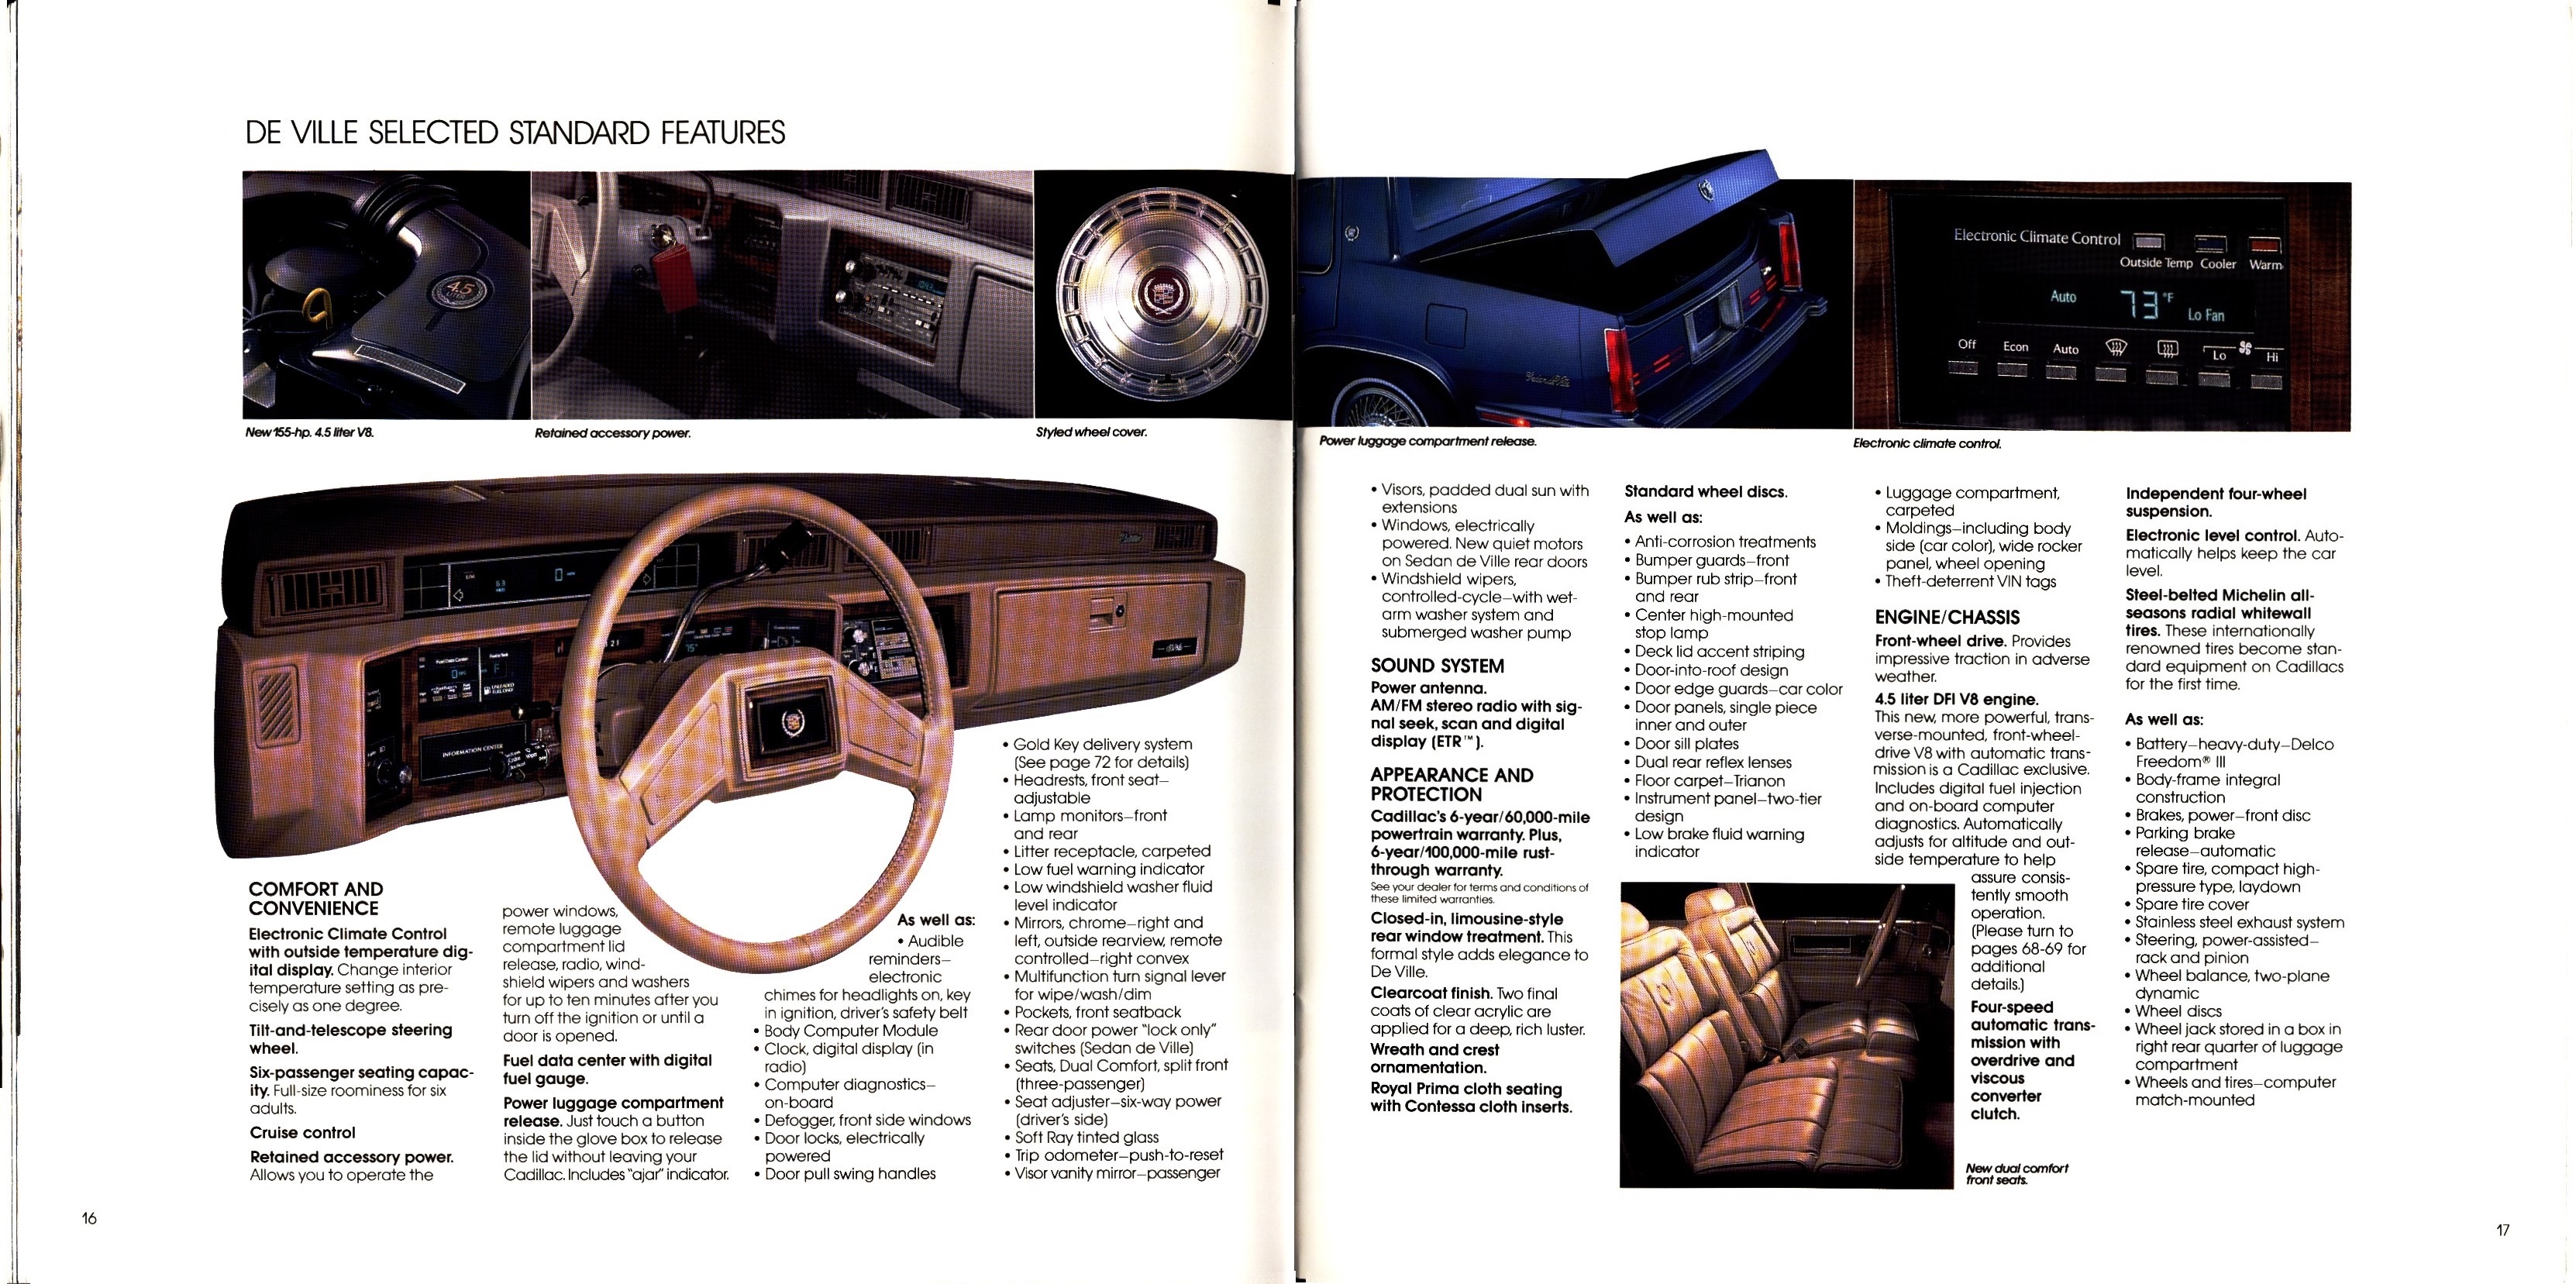 1988 Cadillac Full Line Prestige Brochure 16-17